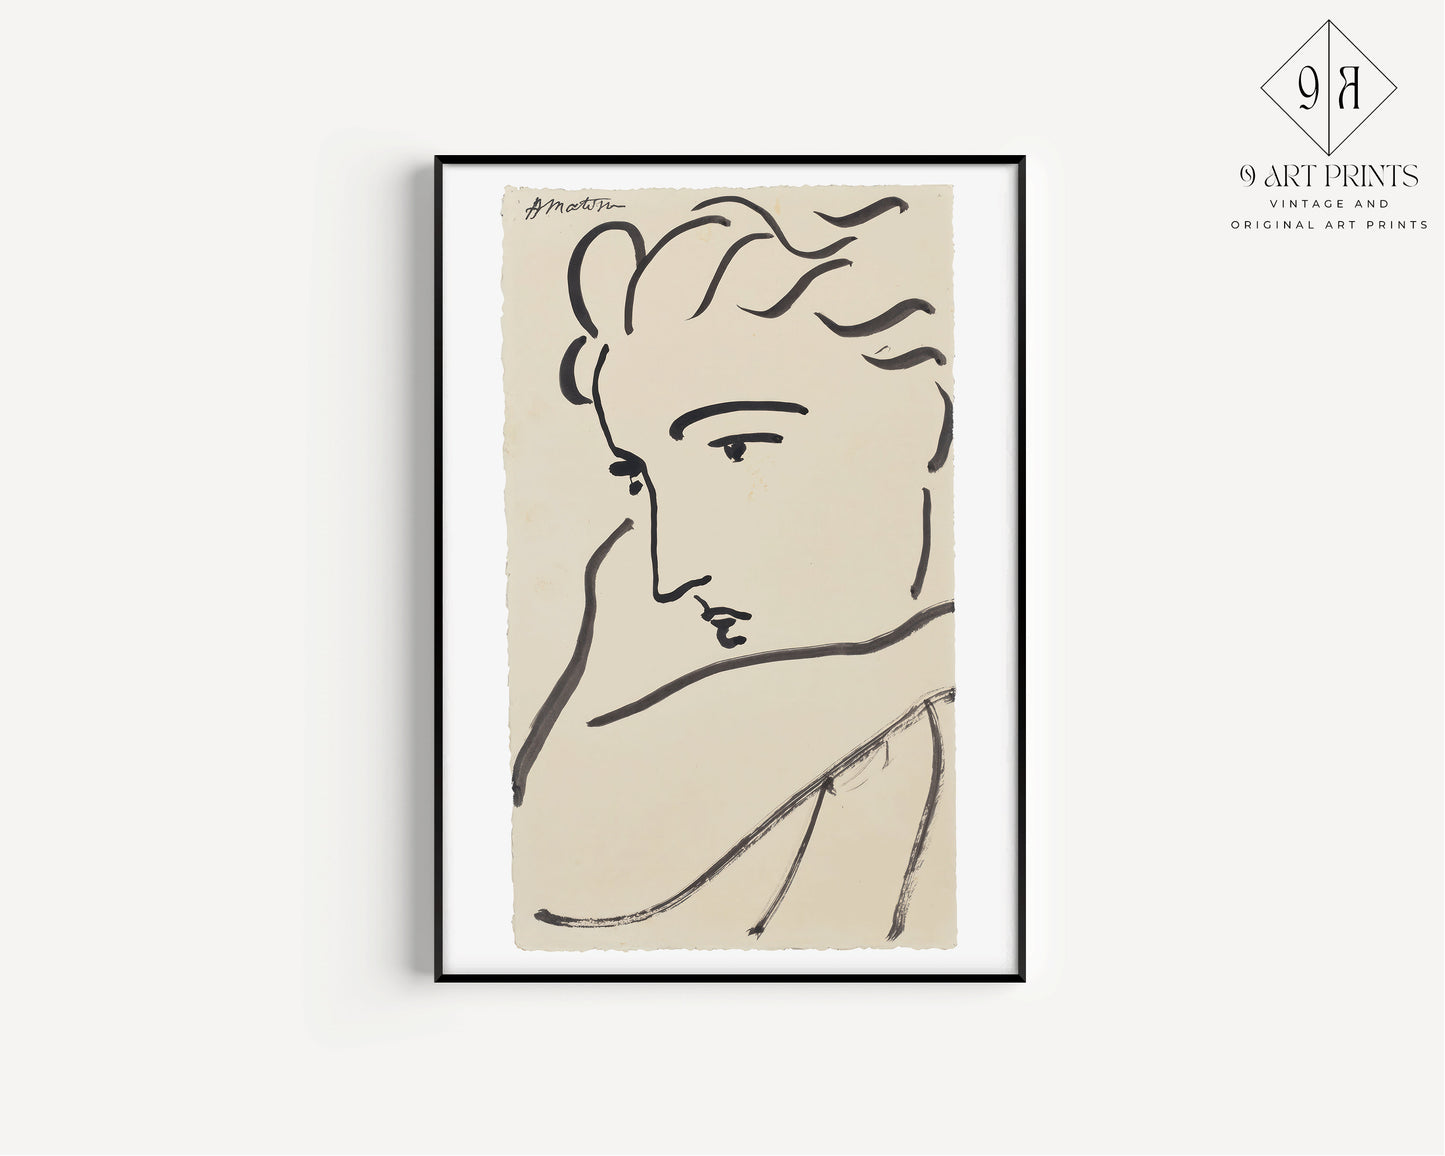 Framed Henri Matisse profil du femme sketch beige Famous Painting Art Print Retro Vintage Museum Ready to Hang Home Office Decor Gift